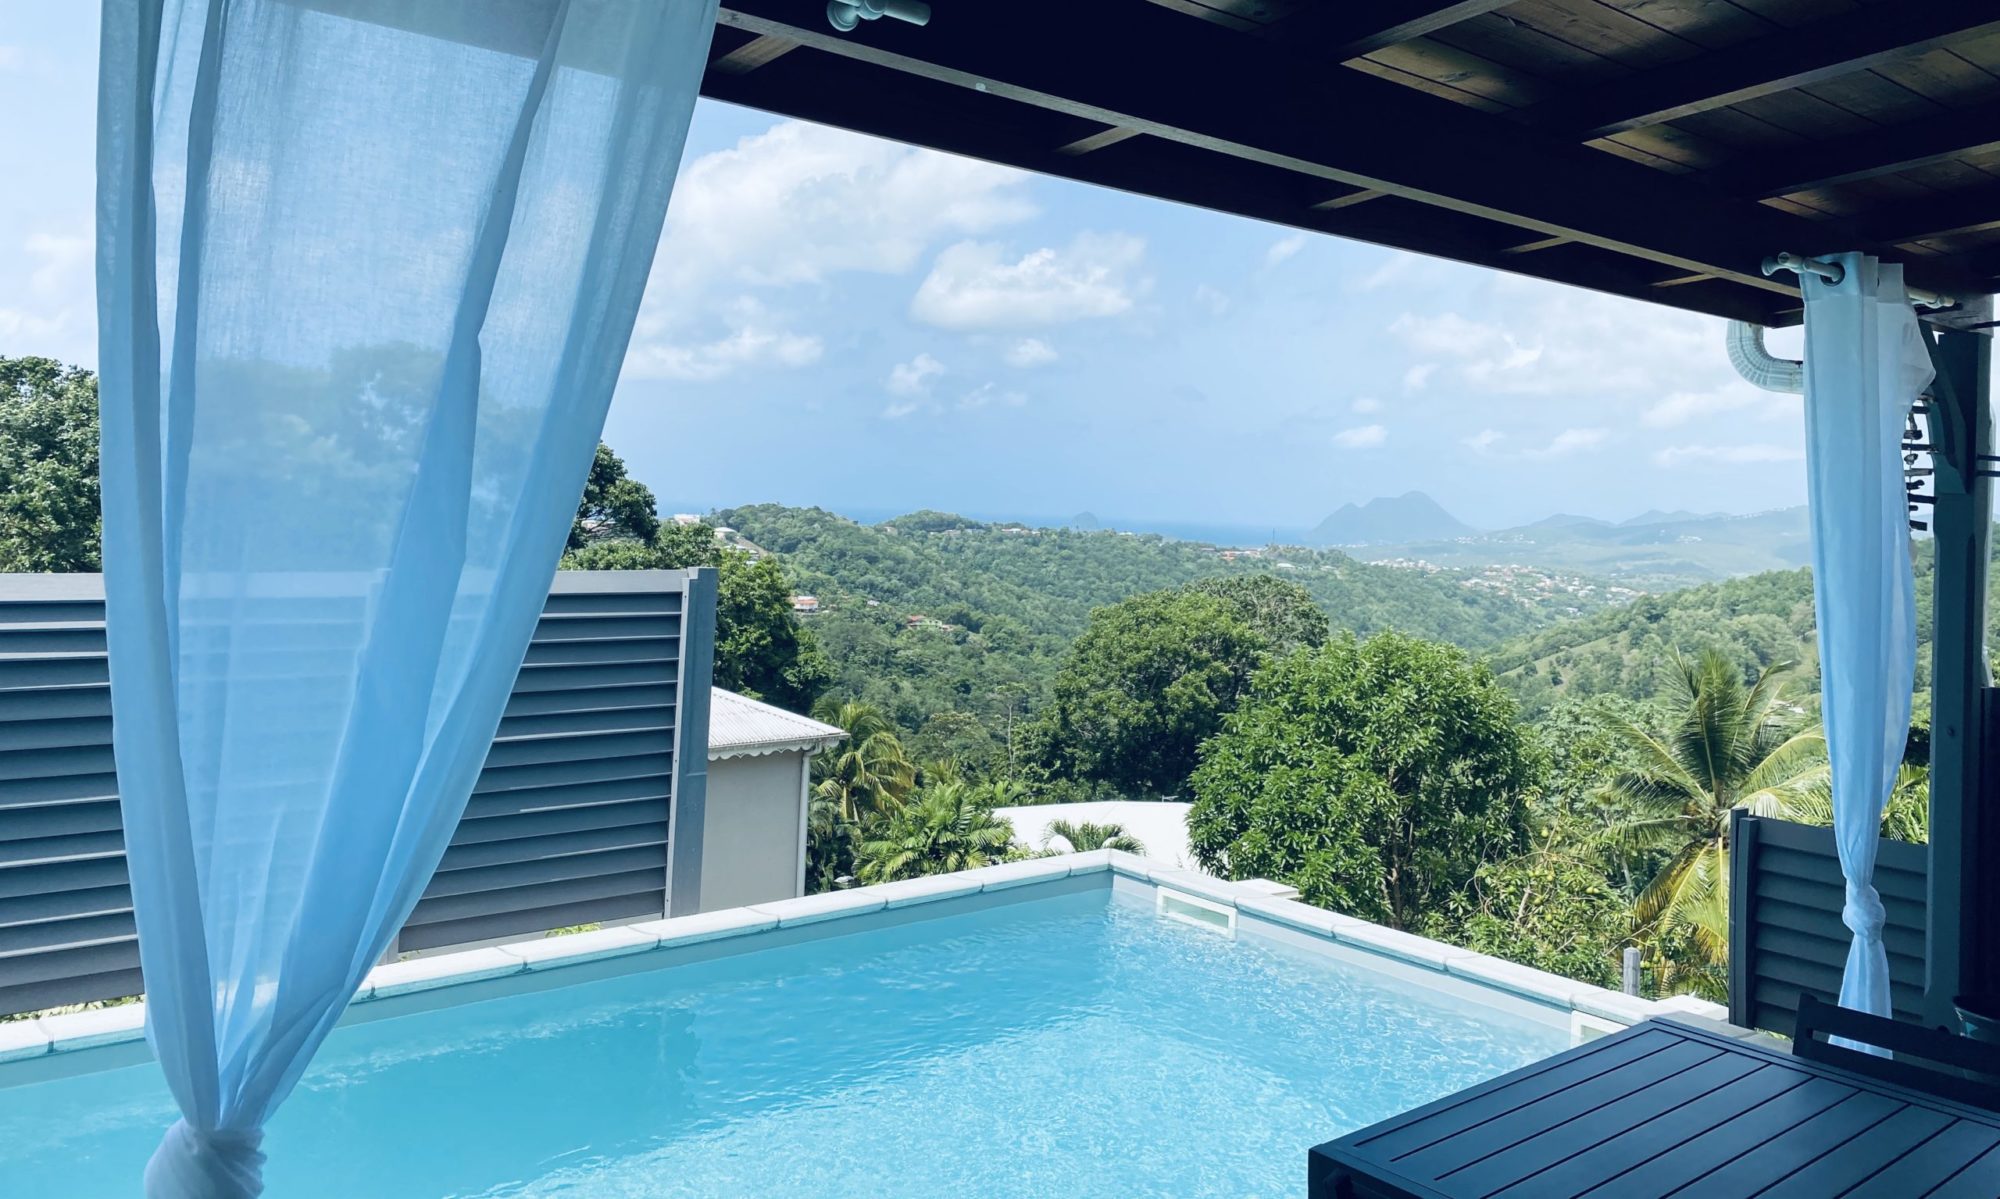 Location de vacances avec piscine en Martinique - Relyzen